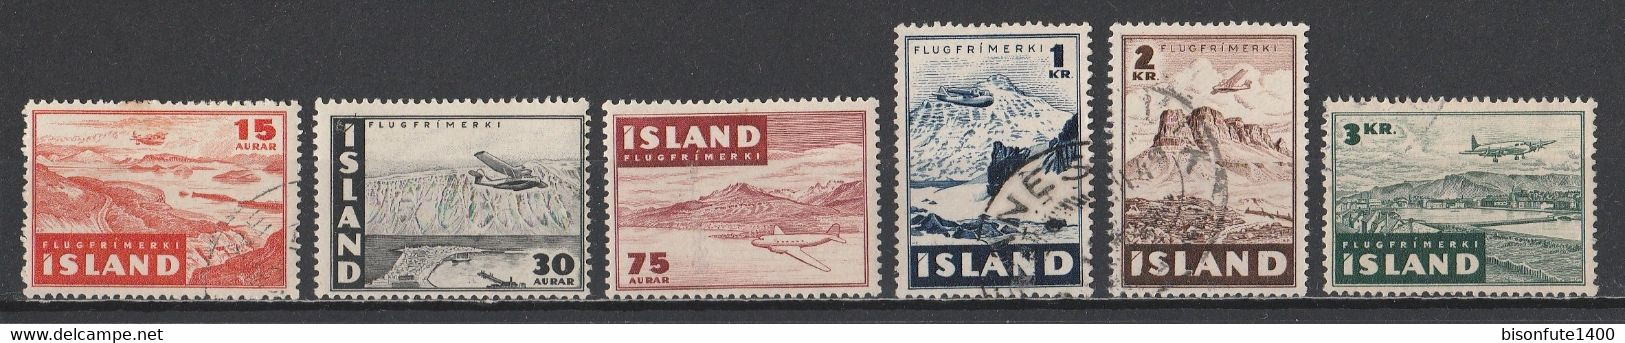 Islande Aérien 1947 : Timbres Yvert & Tellier N° 21 - 22 - 23 - 24 - 25 Et 26 Oblitérés. - Luftpost